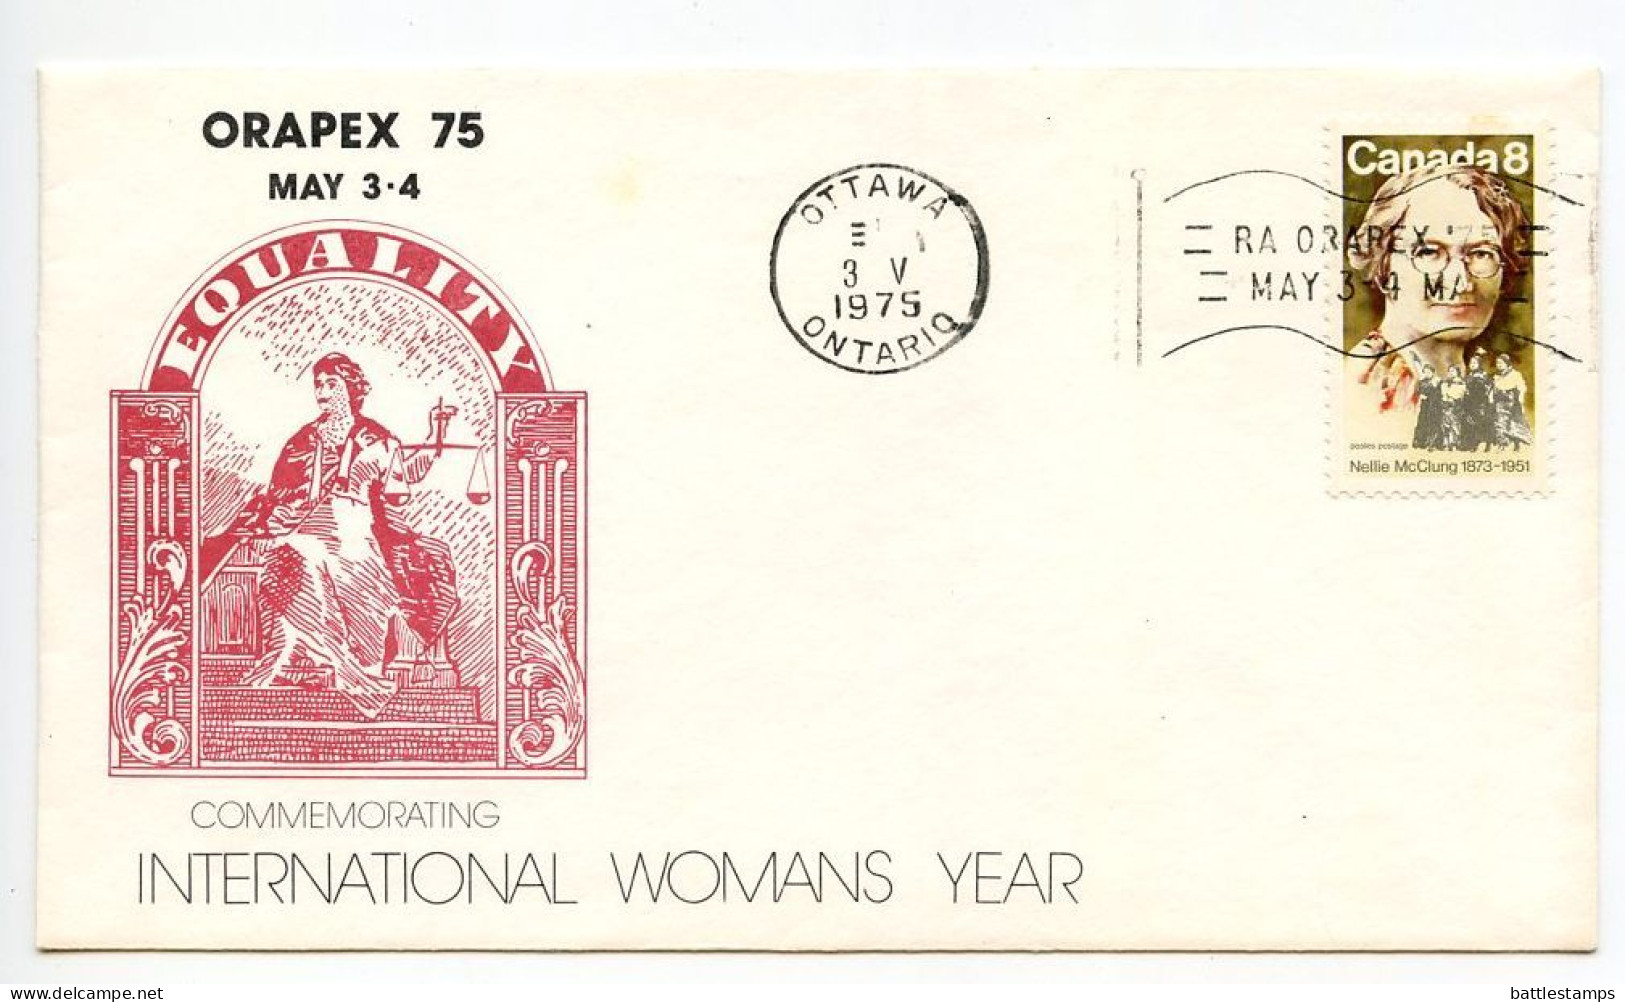 Canada 1975 Commemorative Cover - ORAPEC 75 Philatelic Exhibition - International Womans Year, Scott 622 - Commemorative Covers